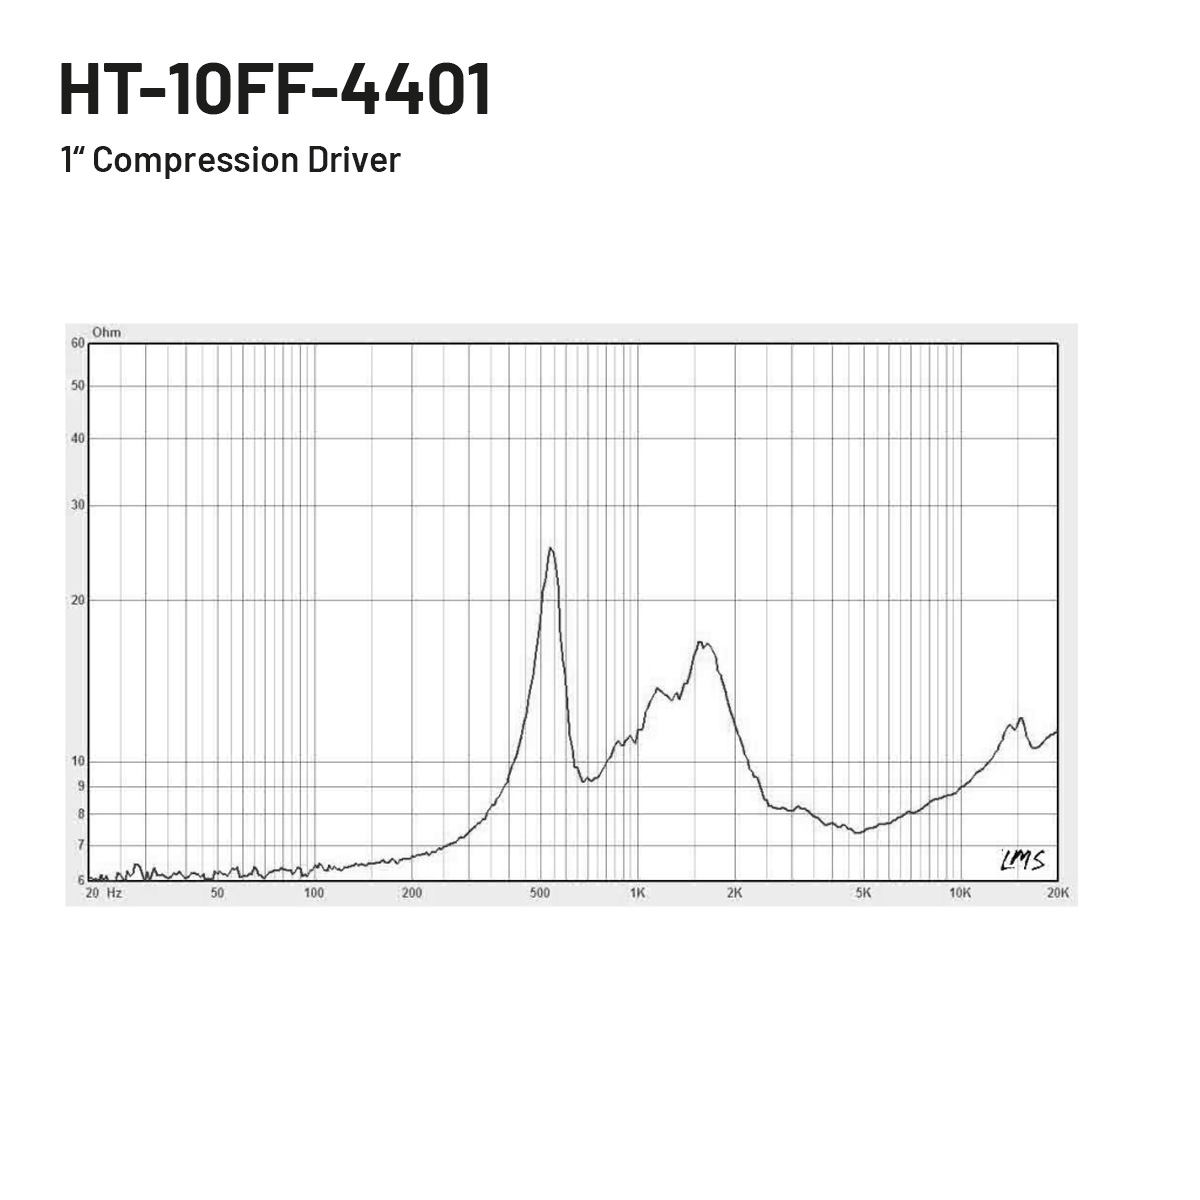 HT-10FF-4401-05